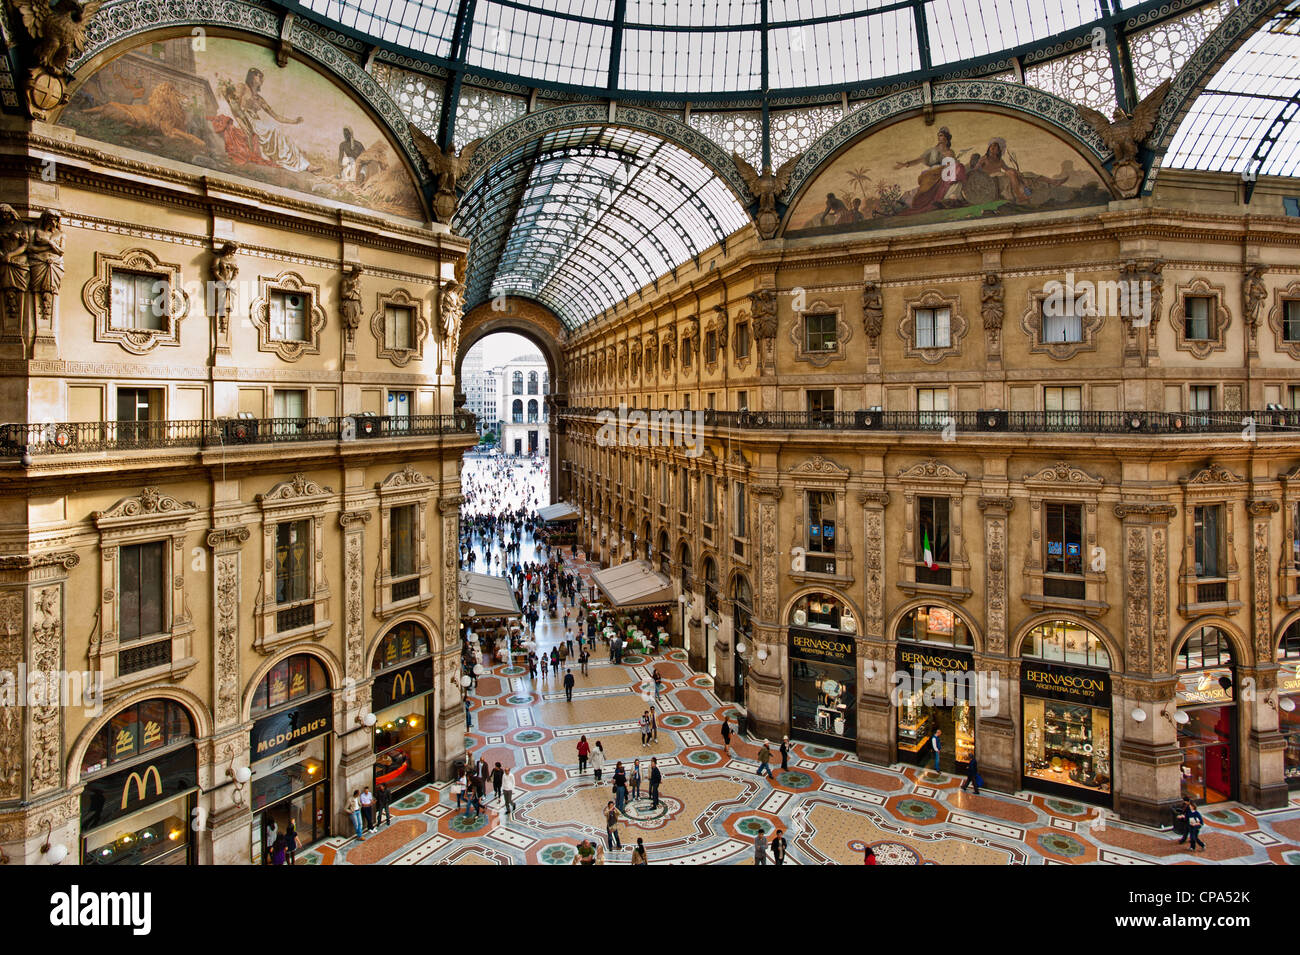 Galleria Vittorio Emanuele II, Milano, Italy outside the P…